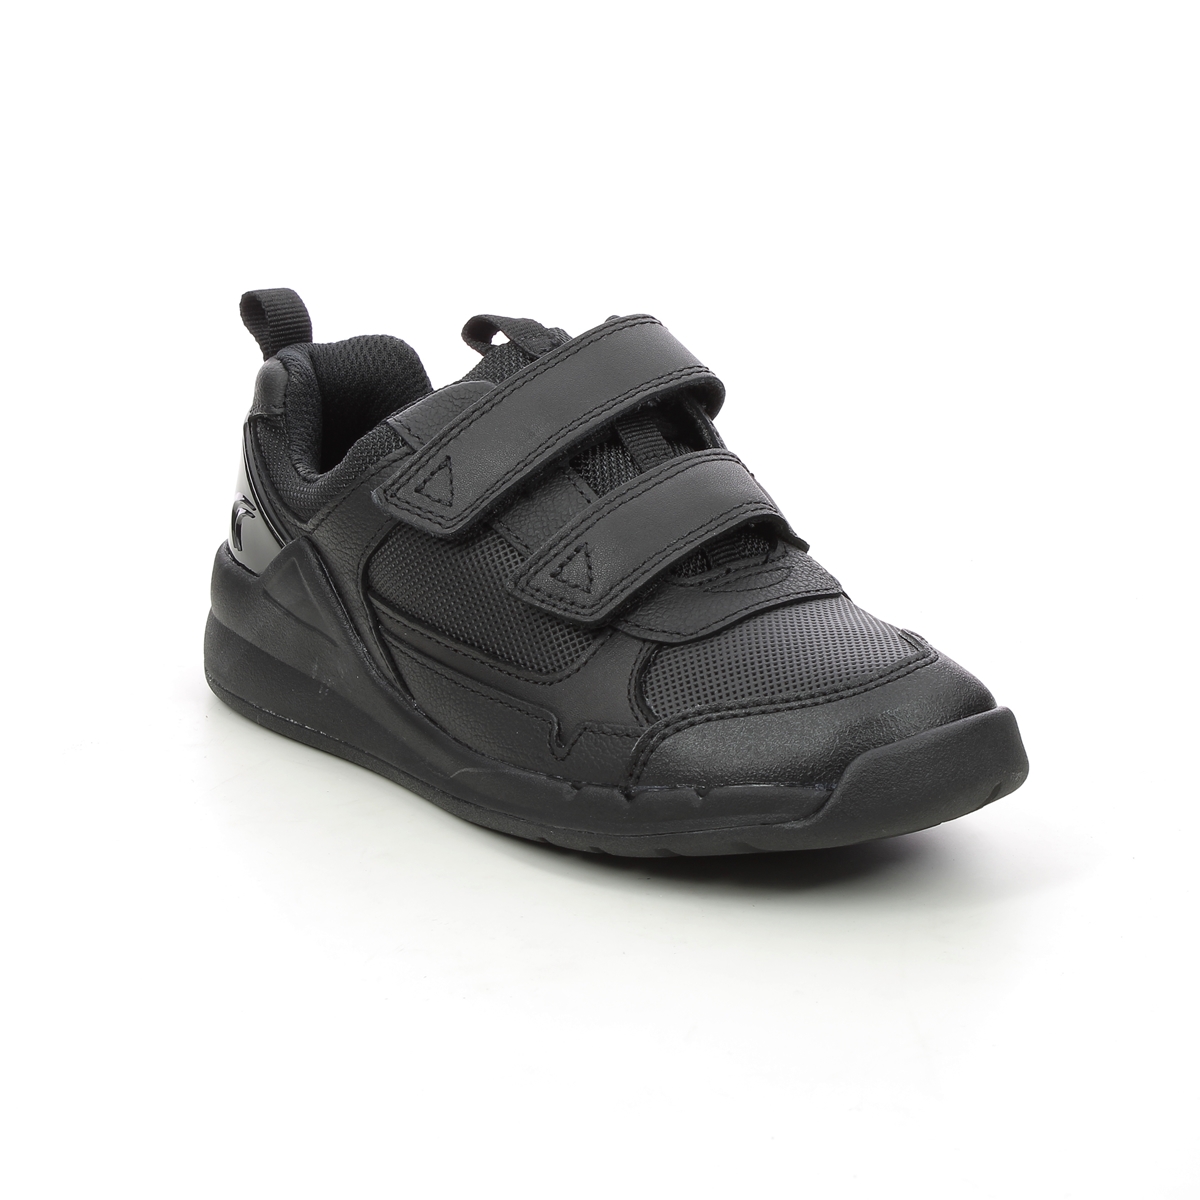 Clarks Orbit Sprint K Black Leather Kids Boys Shoes 534786F In Size 11.5 In Plain Black Leather F Width Fitting Regular Fit For kids